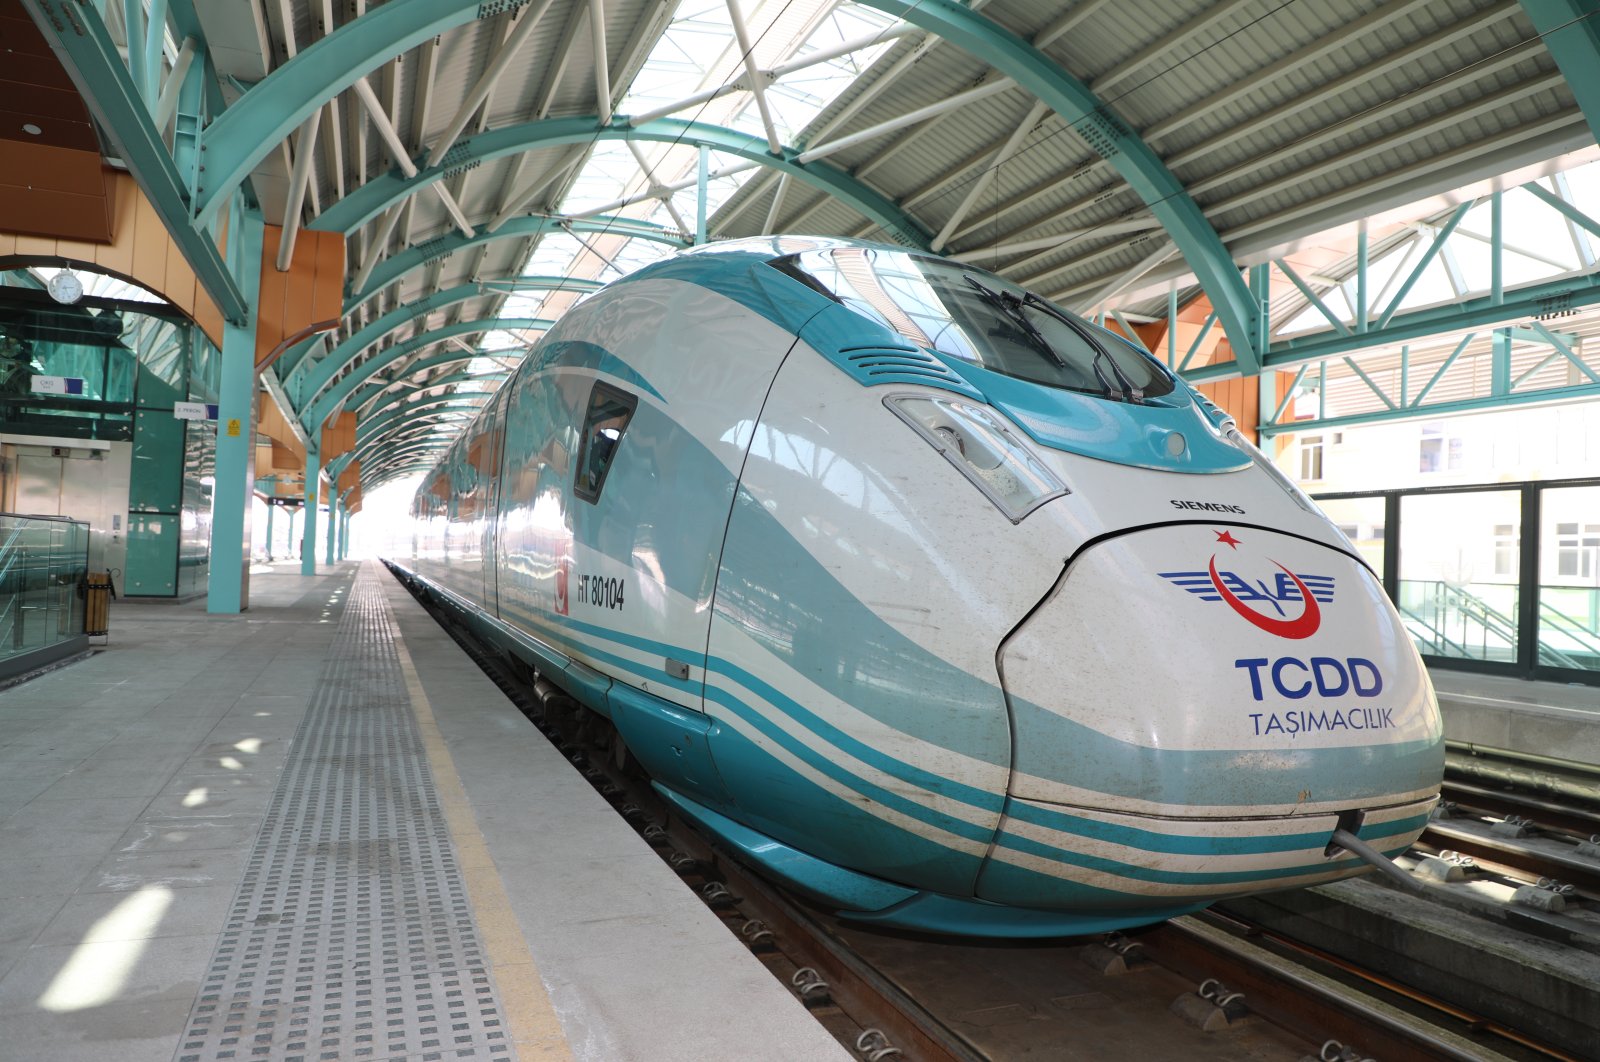 Ankara-Sivas high-speed train soon to shorten distance, travel time